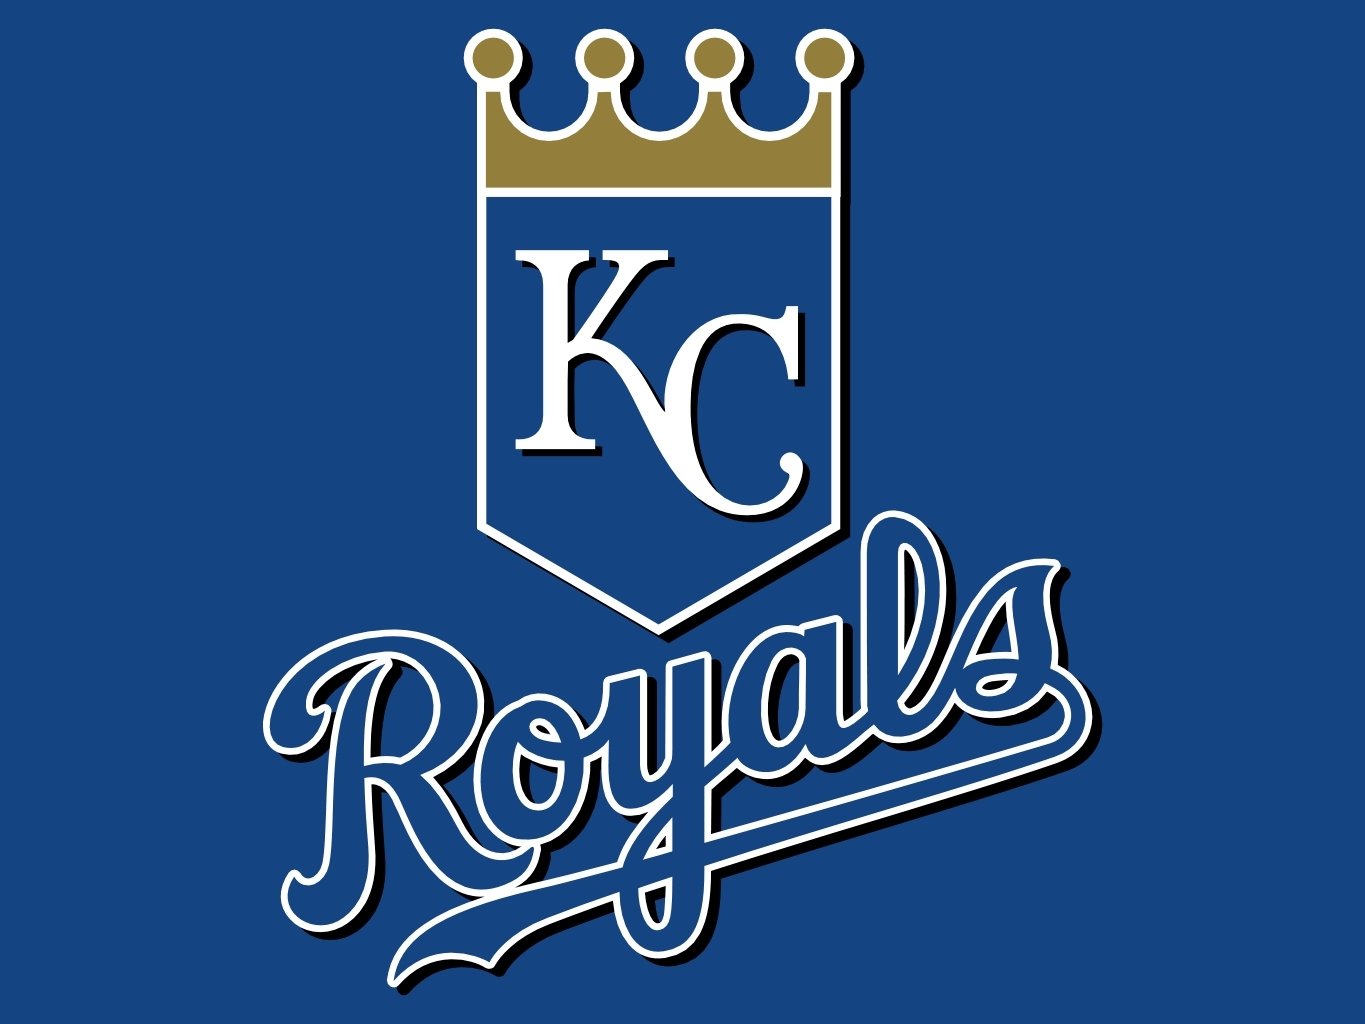 Kansas City Royals iPhone 5 wallpaper background  Kansas city royals logo,  Kansas city royals baseball, Royal wallpaper